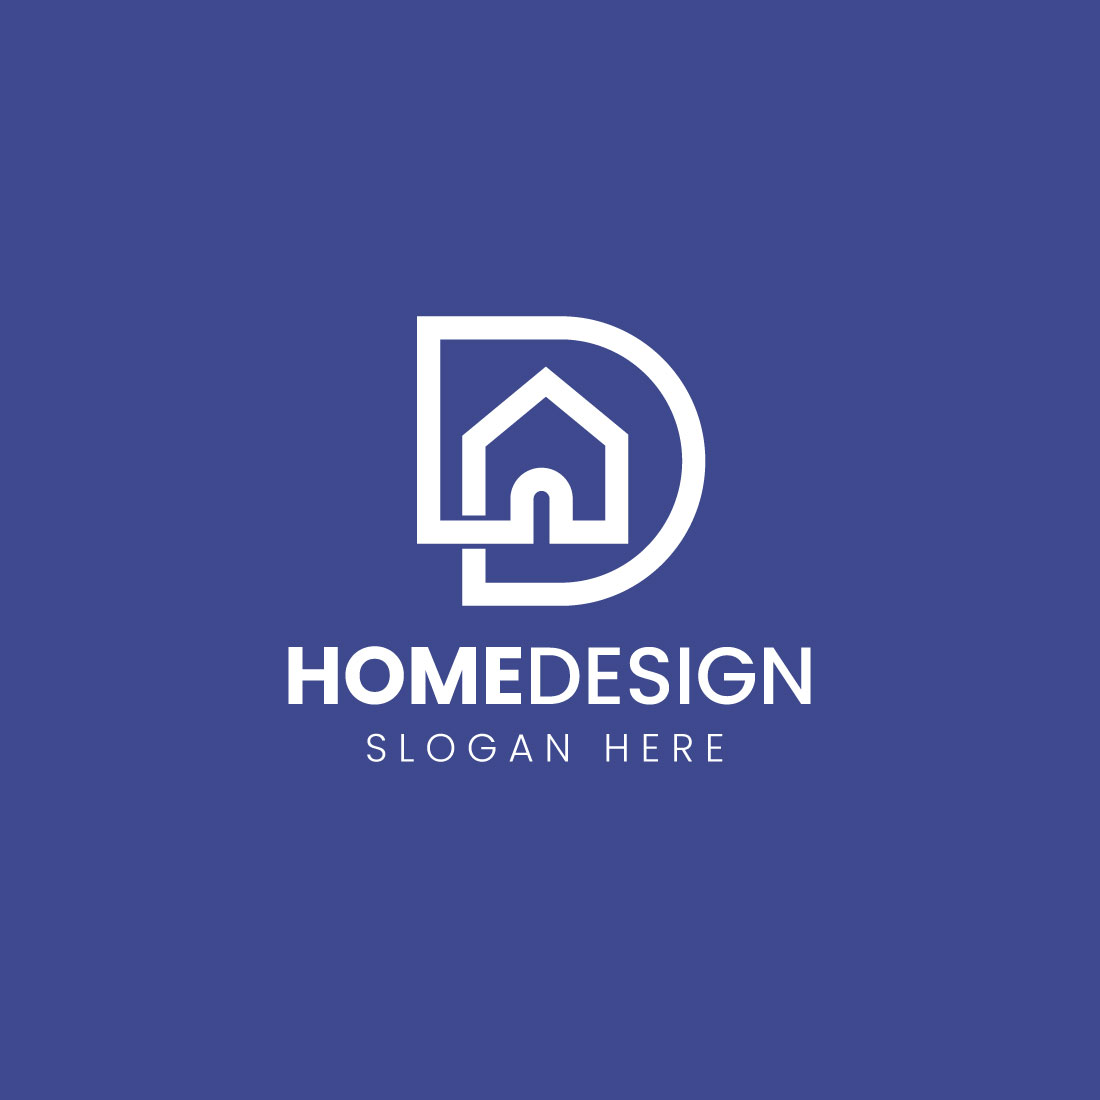 Letter D Home Logo design preview image.